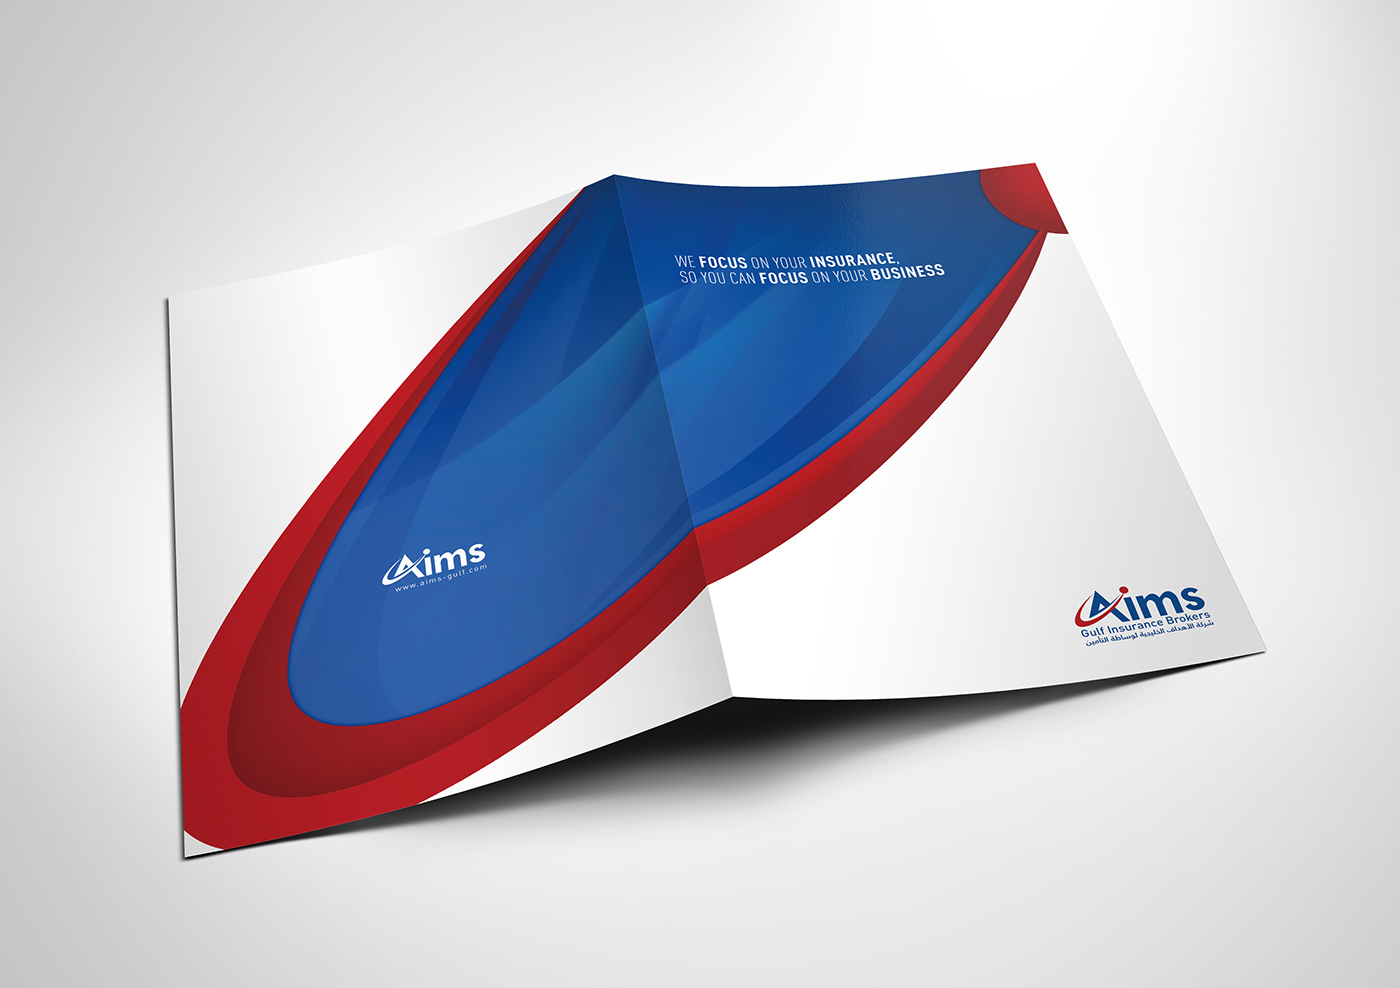 AIMS gulf insurance Insurance brokers letterhead business card envelope folder design memo pad